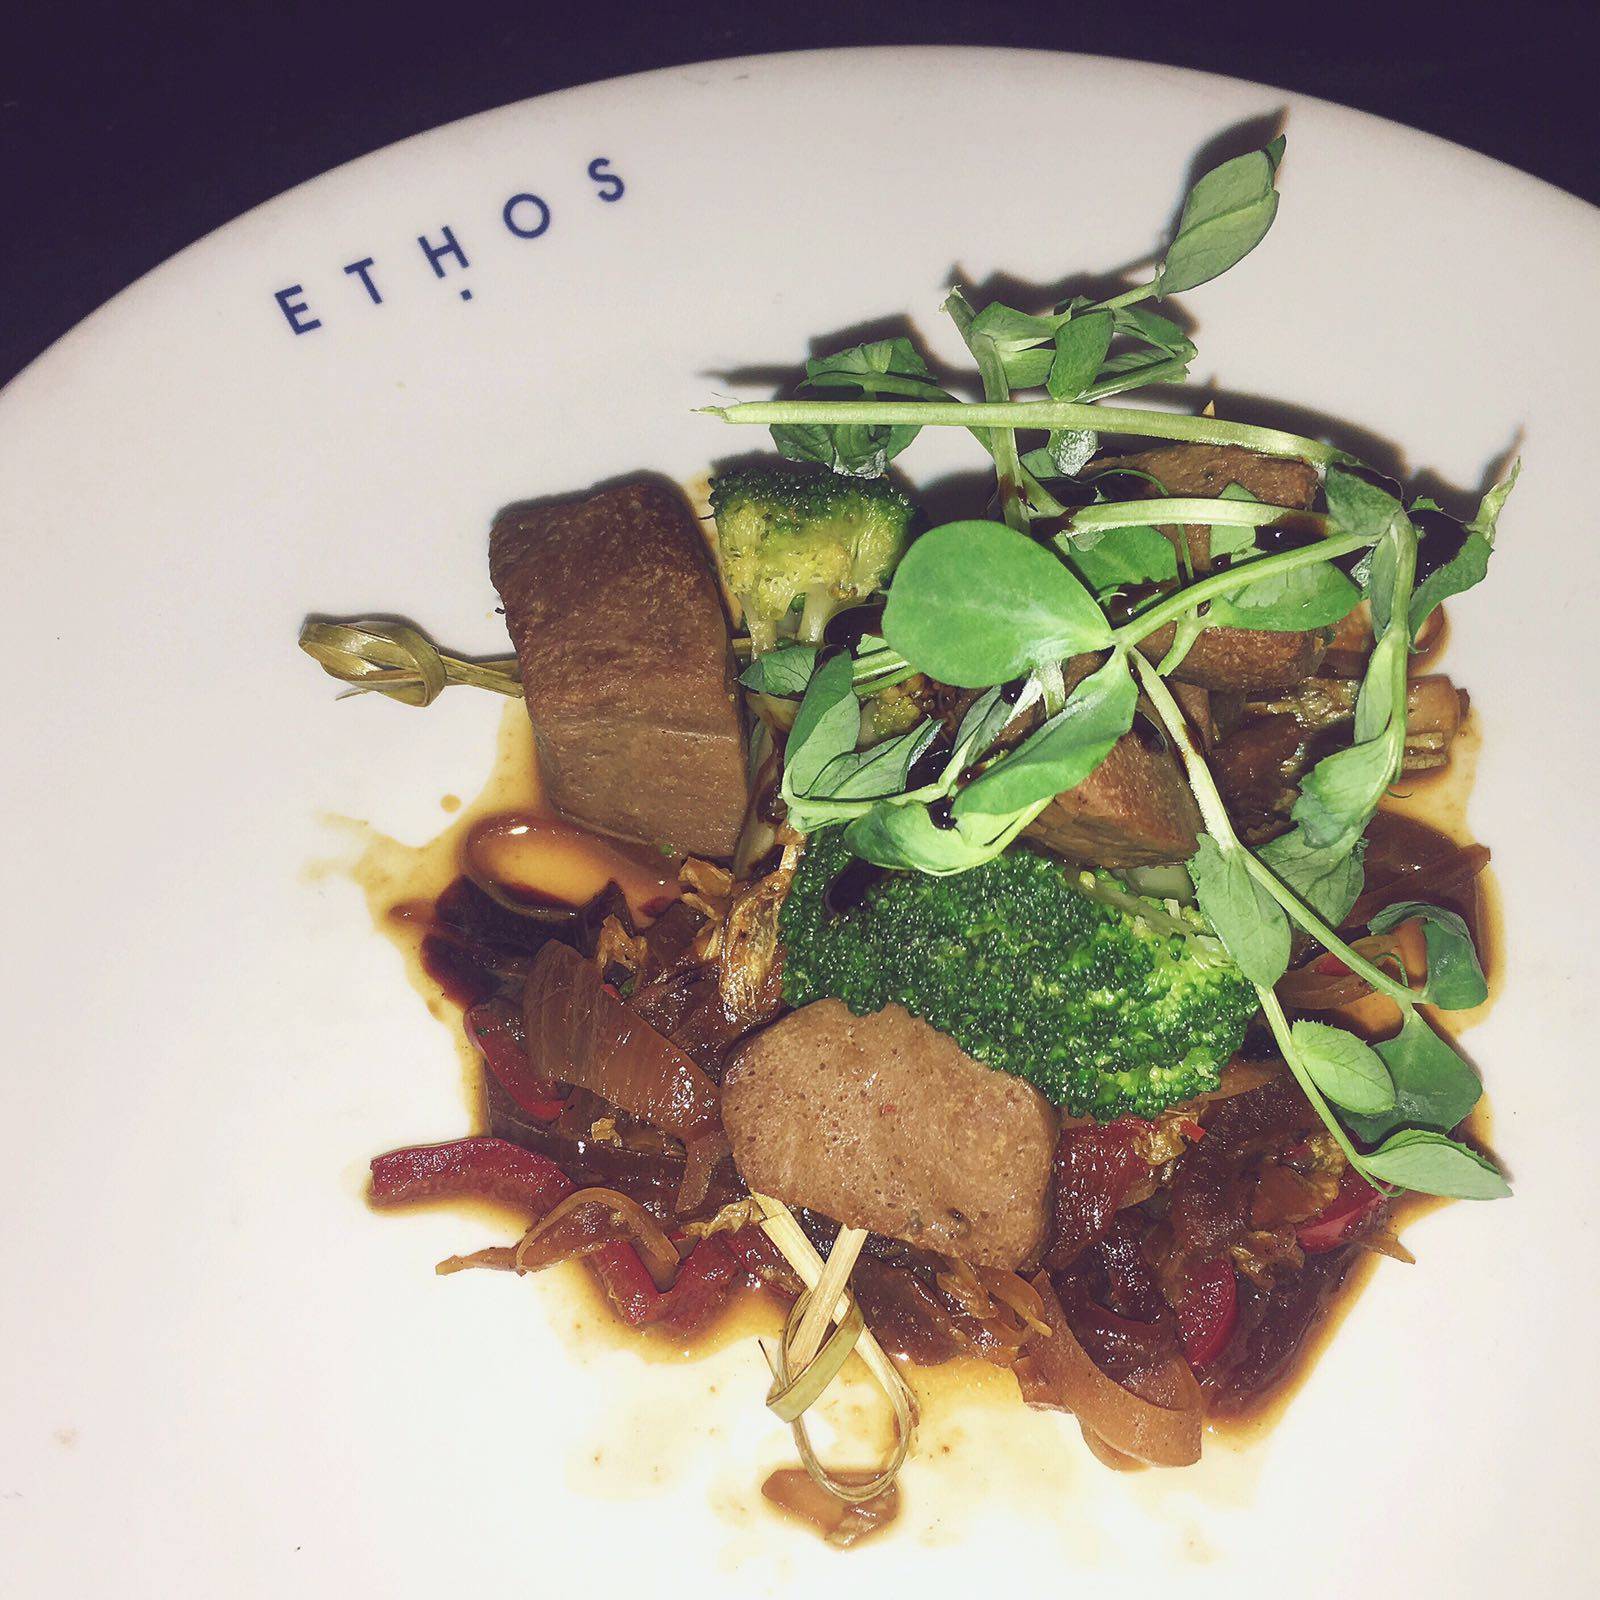 Ethos Seitan Skewers London Oxford Street Vegan Vegetarian Restaurant